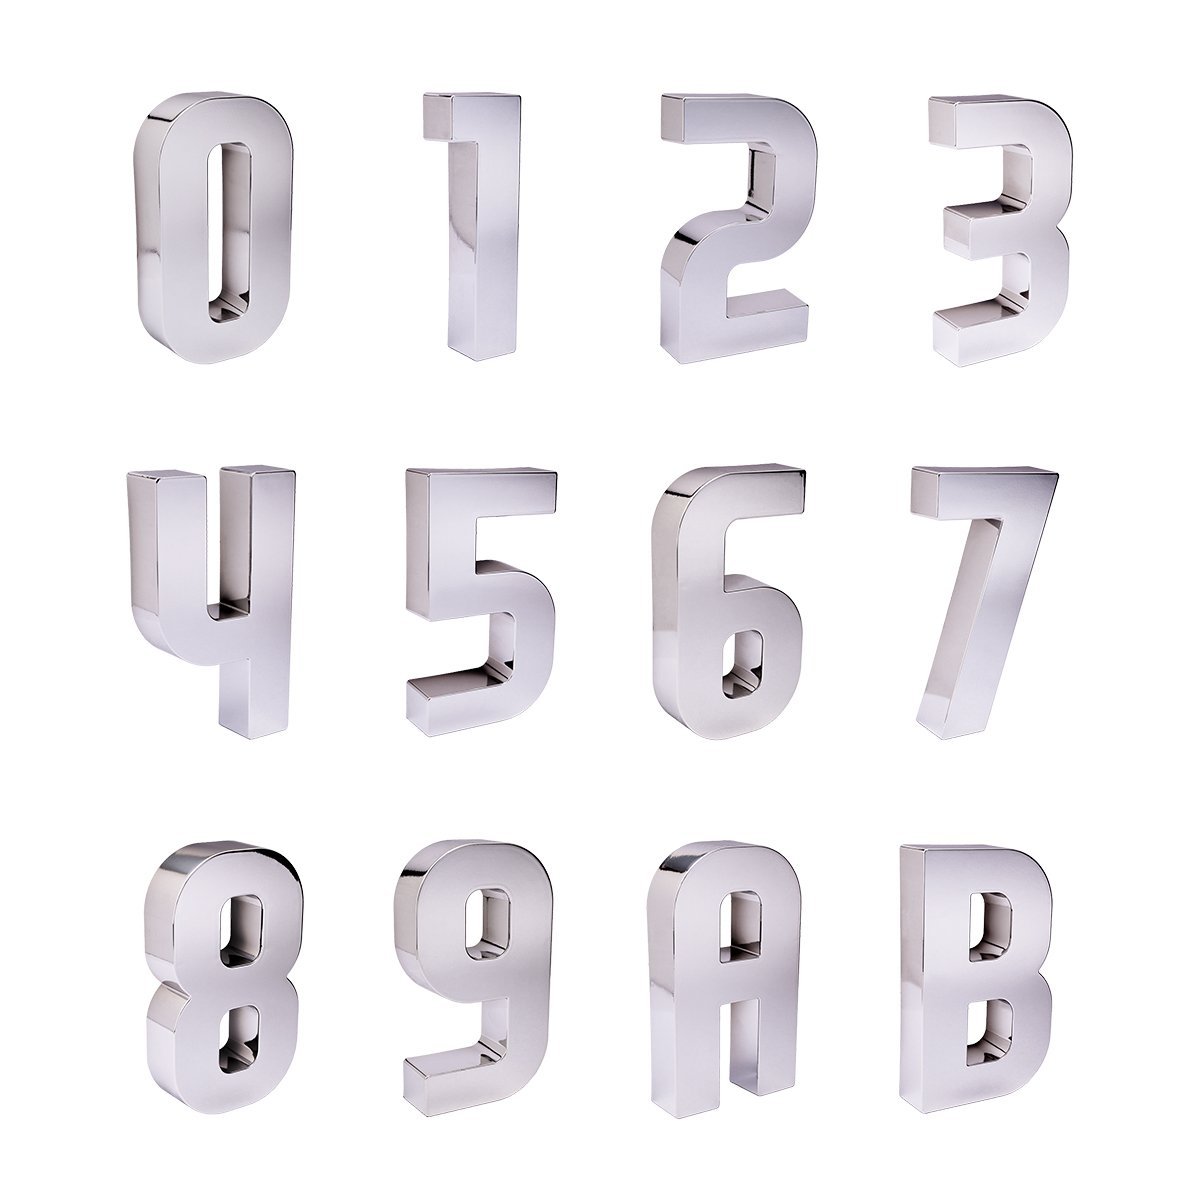 Números e Letras Residenciais / Comerciais Cromado 3D 19cm:7 - 2